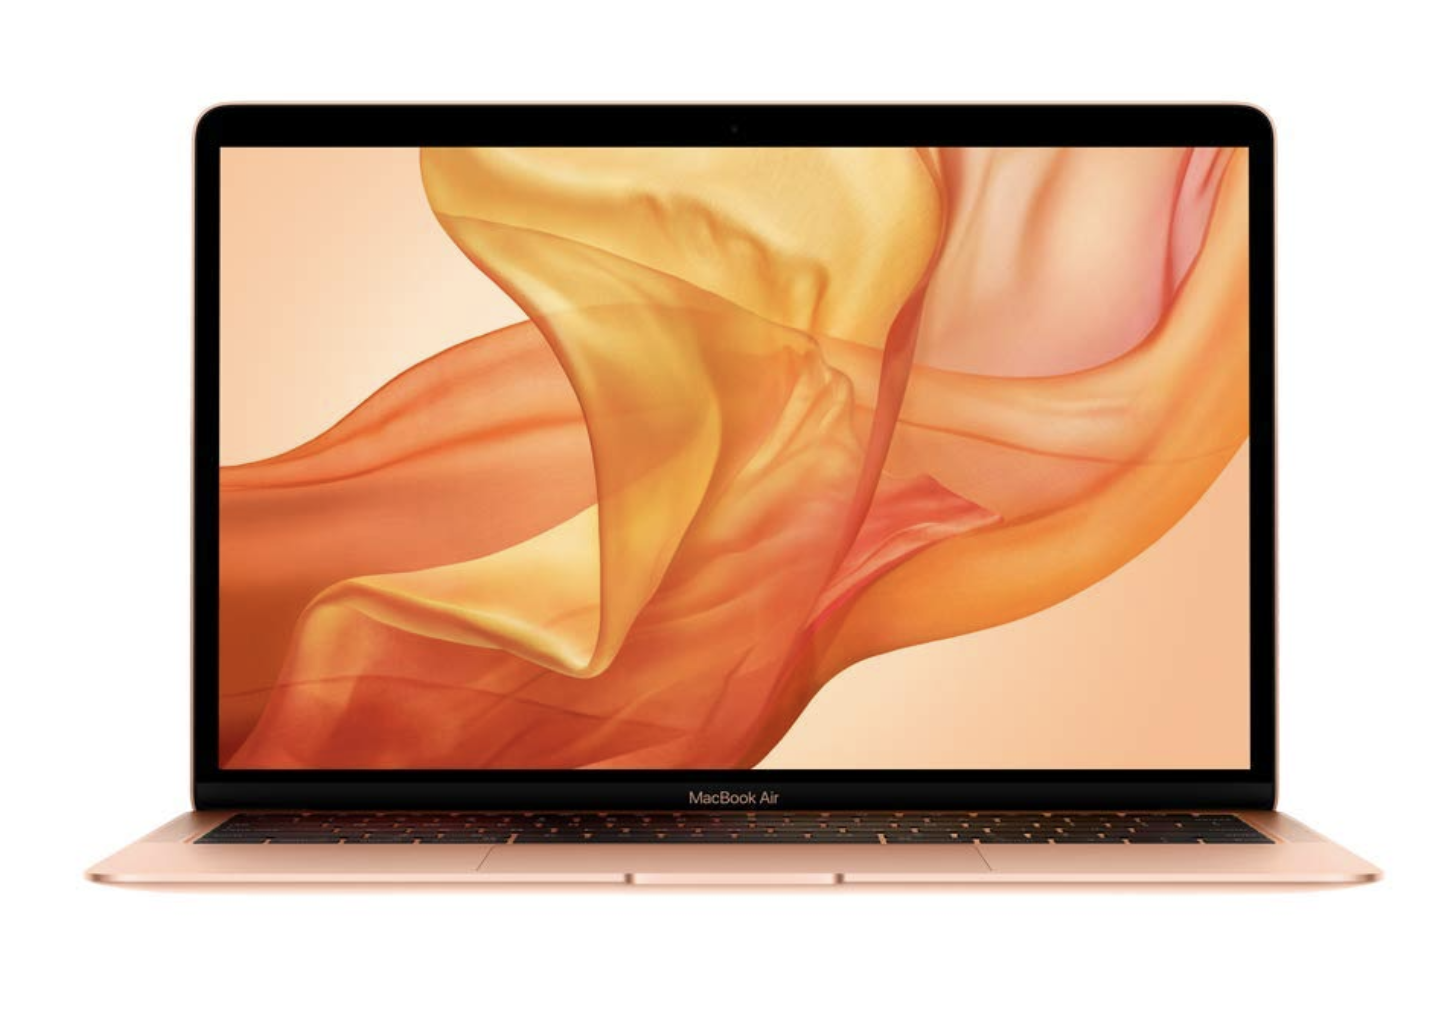  New Apple MacBook Air (13-inch, 8GB RAM, 128GB Storage)